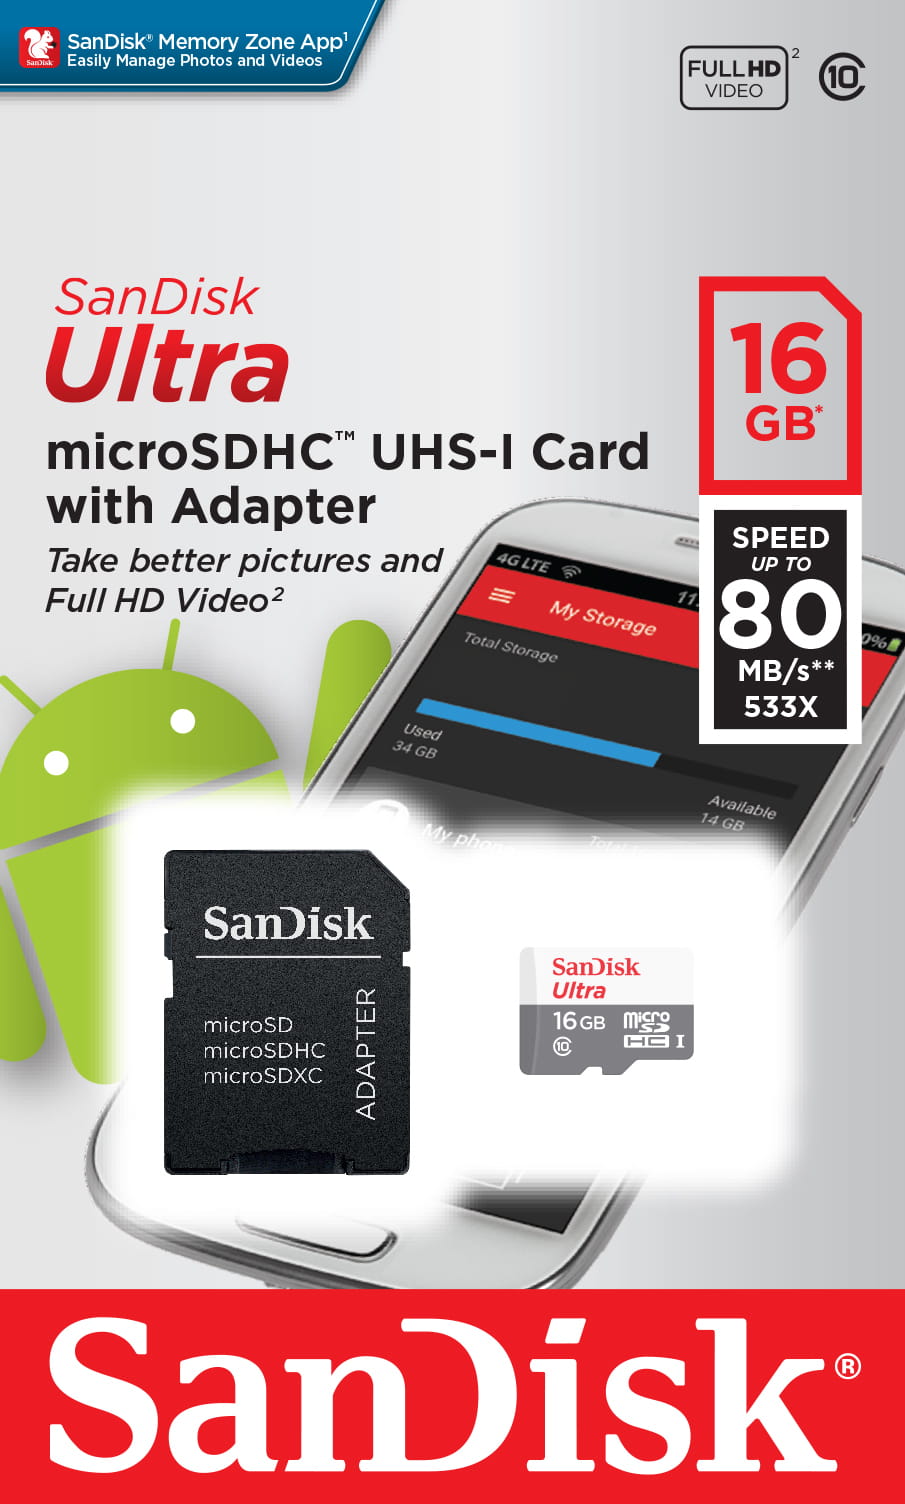 microSD SanDisk 16GB / SD adapter / Ultra 300x / SDSQUNS-016G-GN3MA /